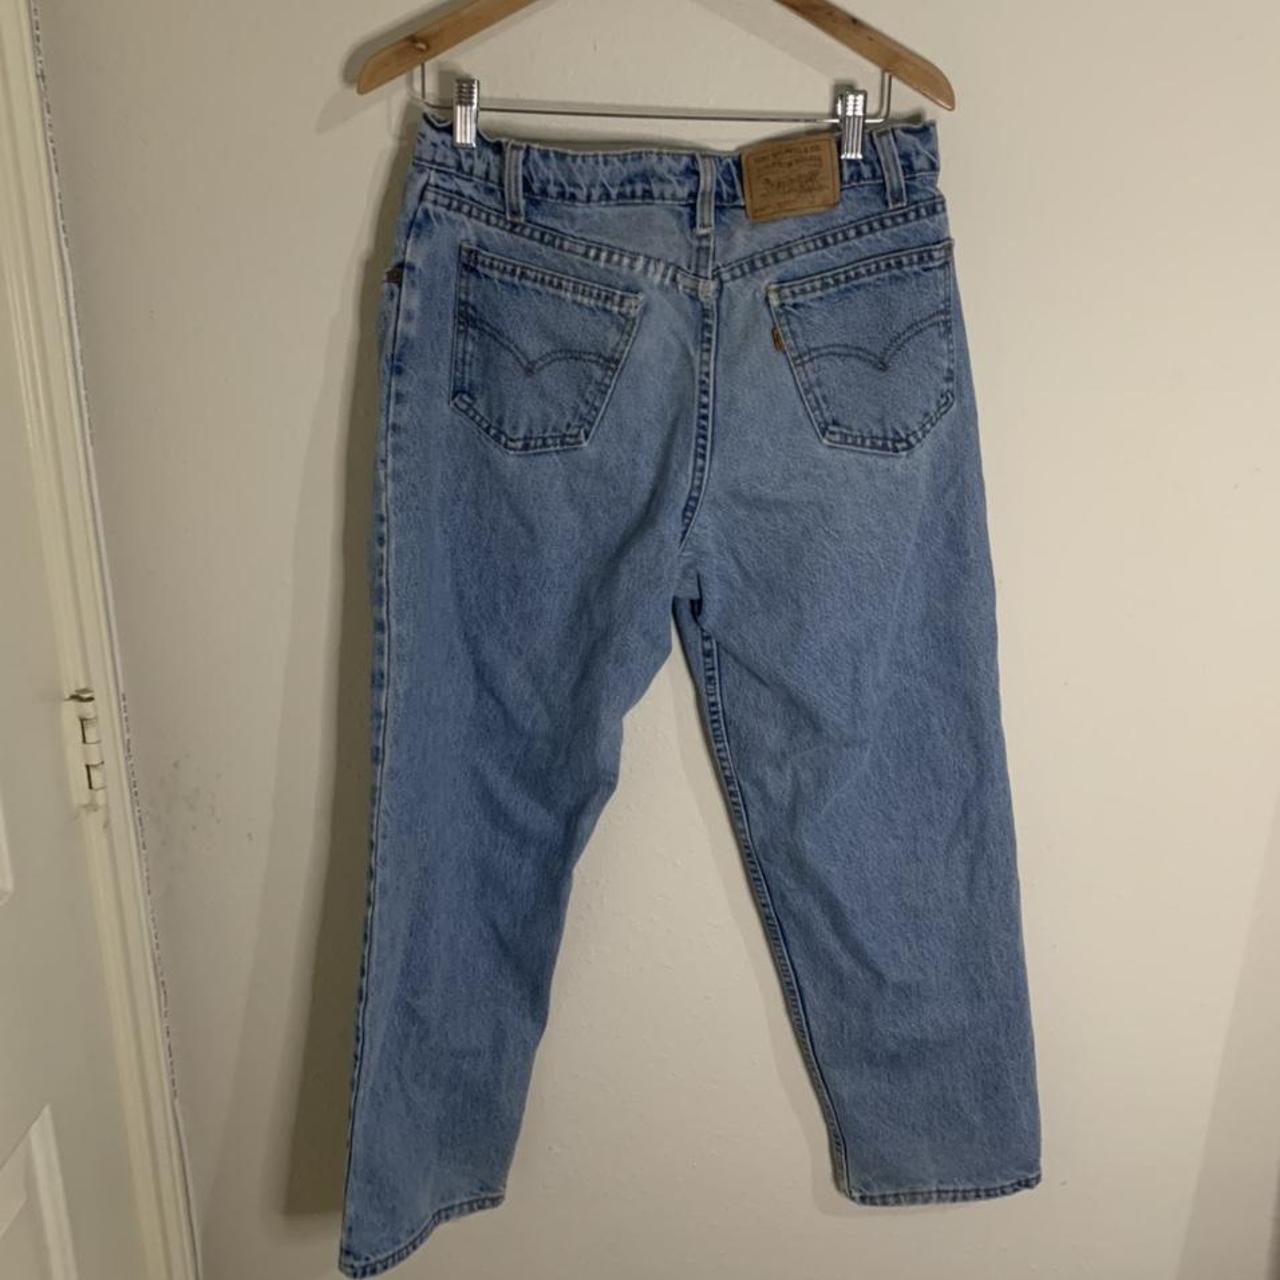 Vintage Levi’s 550 Orange Tab Jeans Relaxed Fit... - Depop